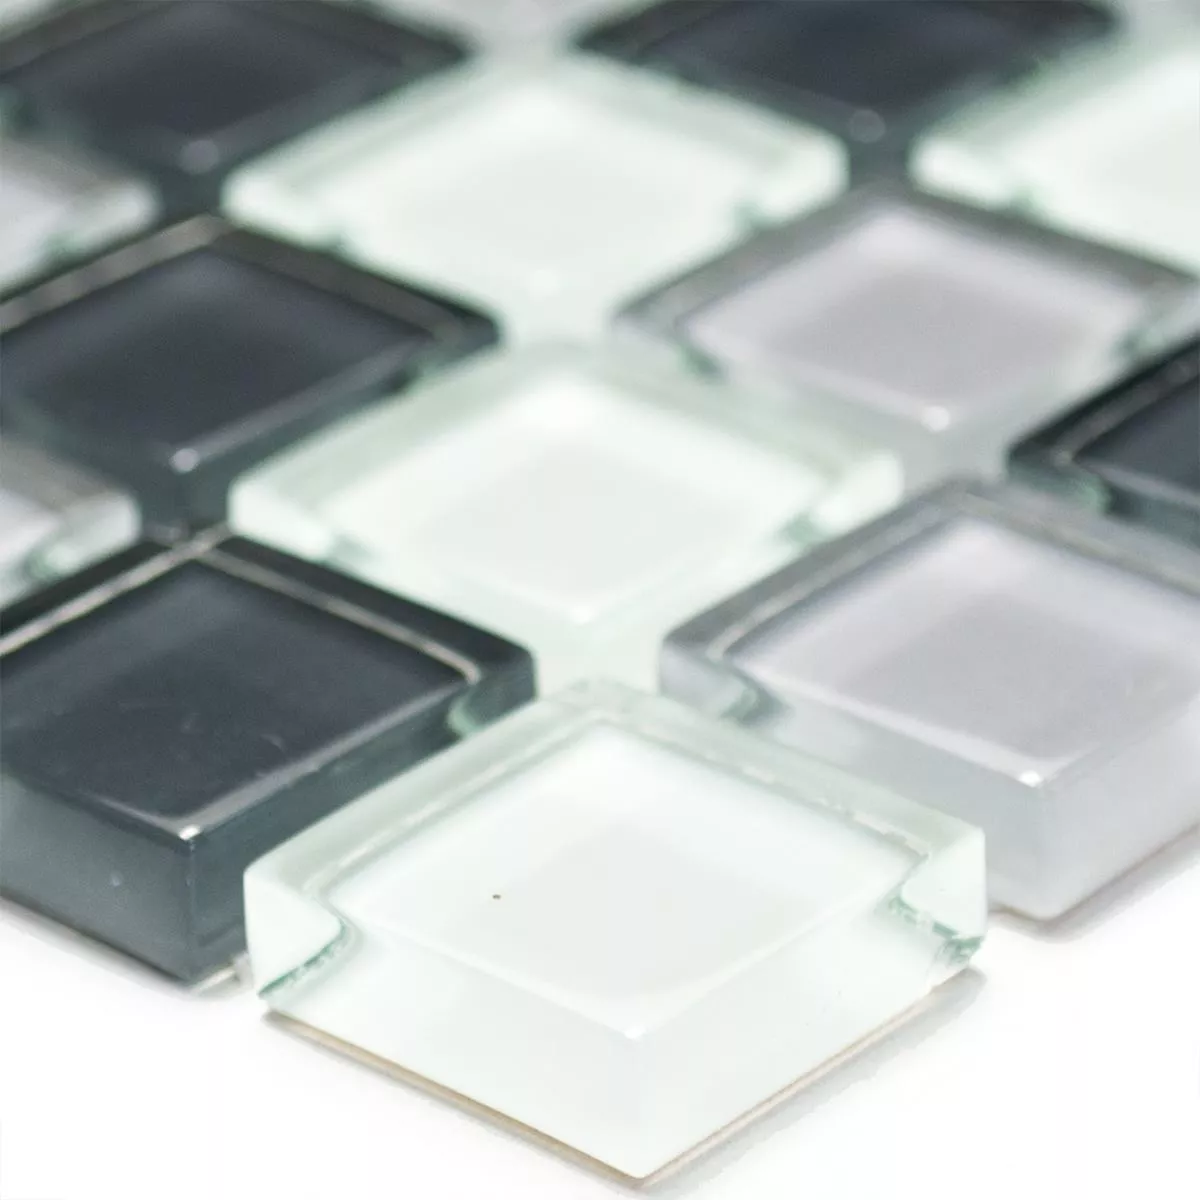 Sample Glass Mosaic Tiles Alpha Grey White Square 